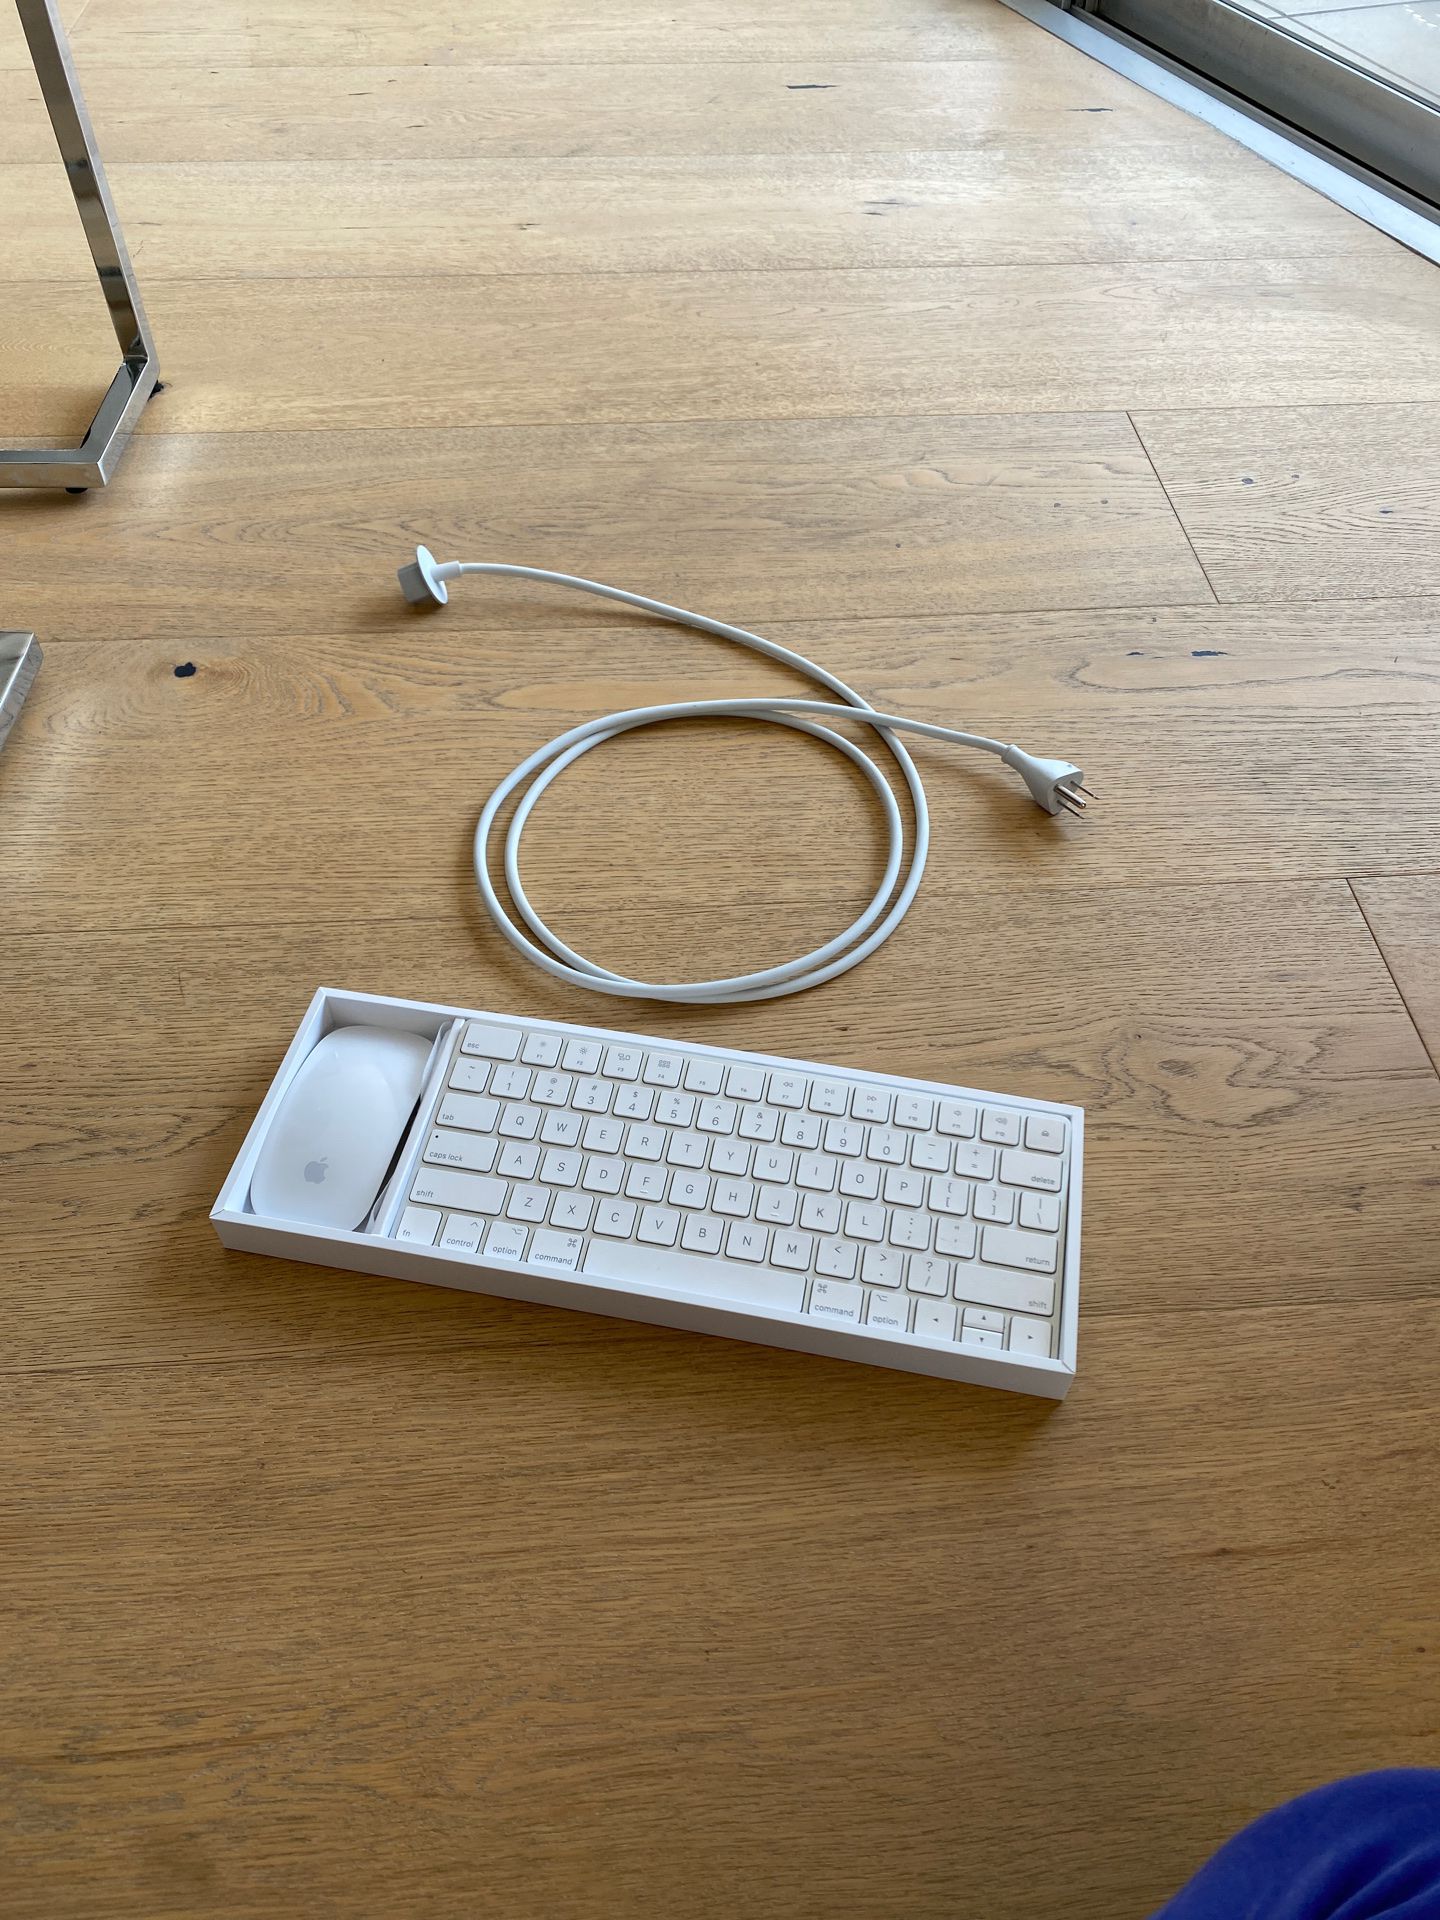 Apple Magic Mouse, Keyboard & Power cord $100